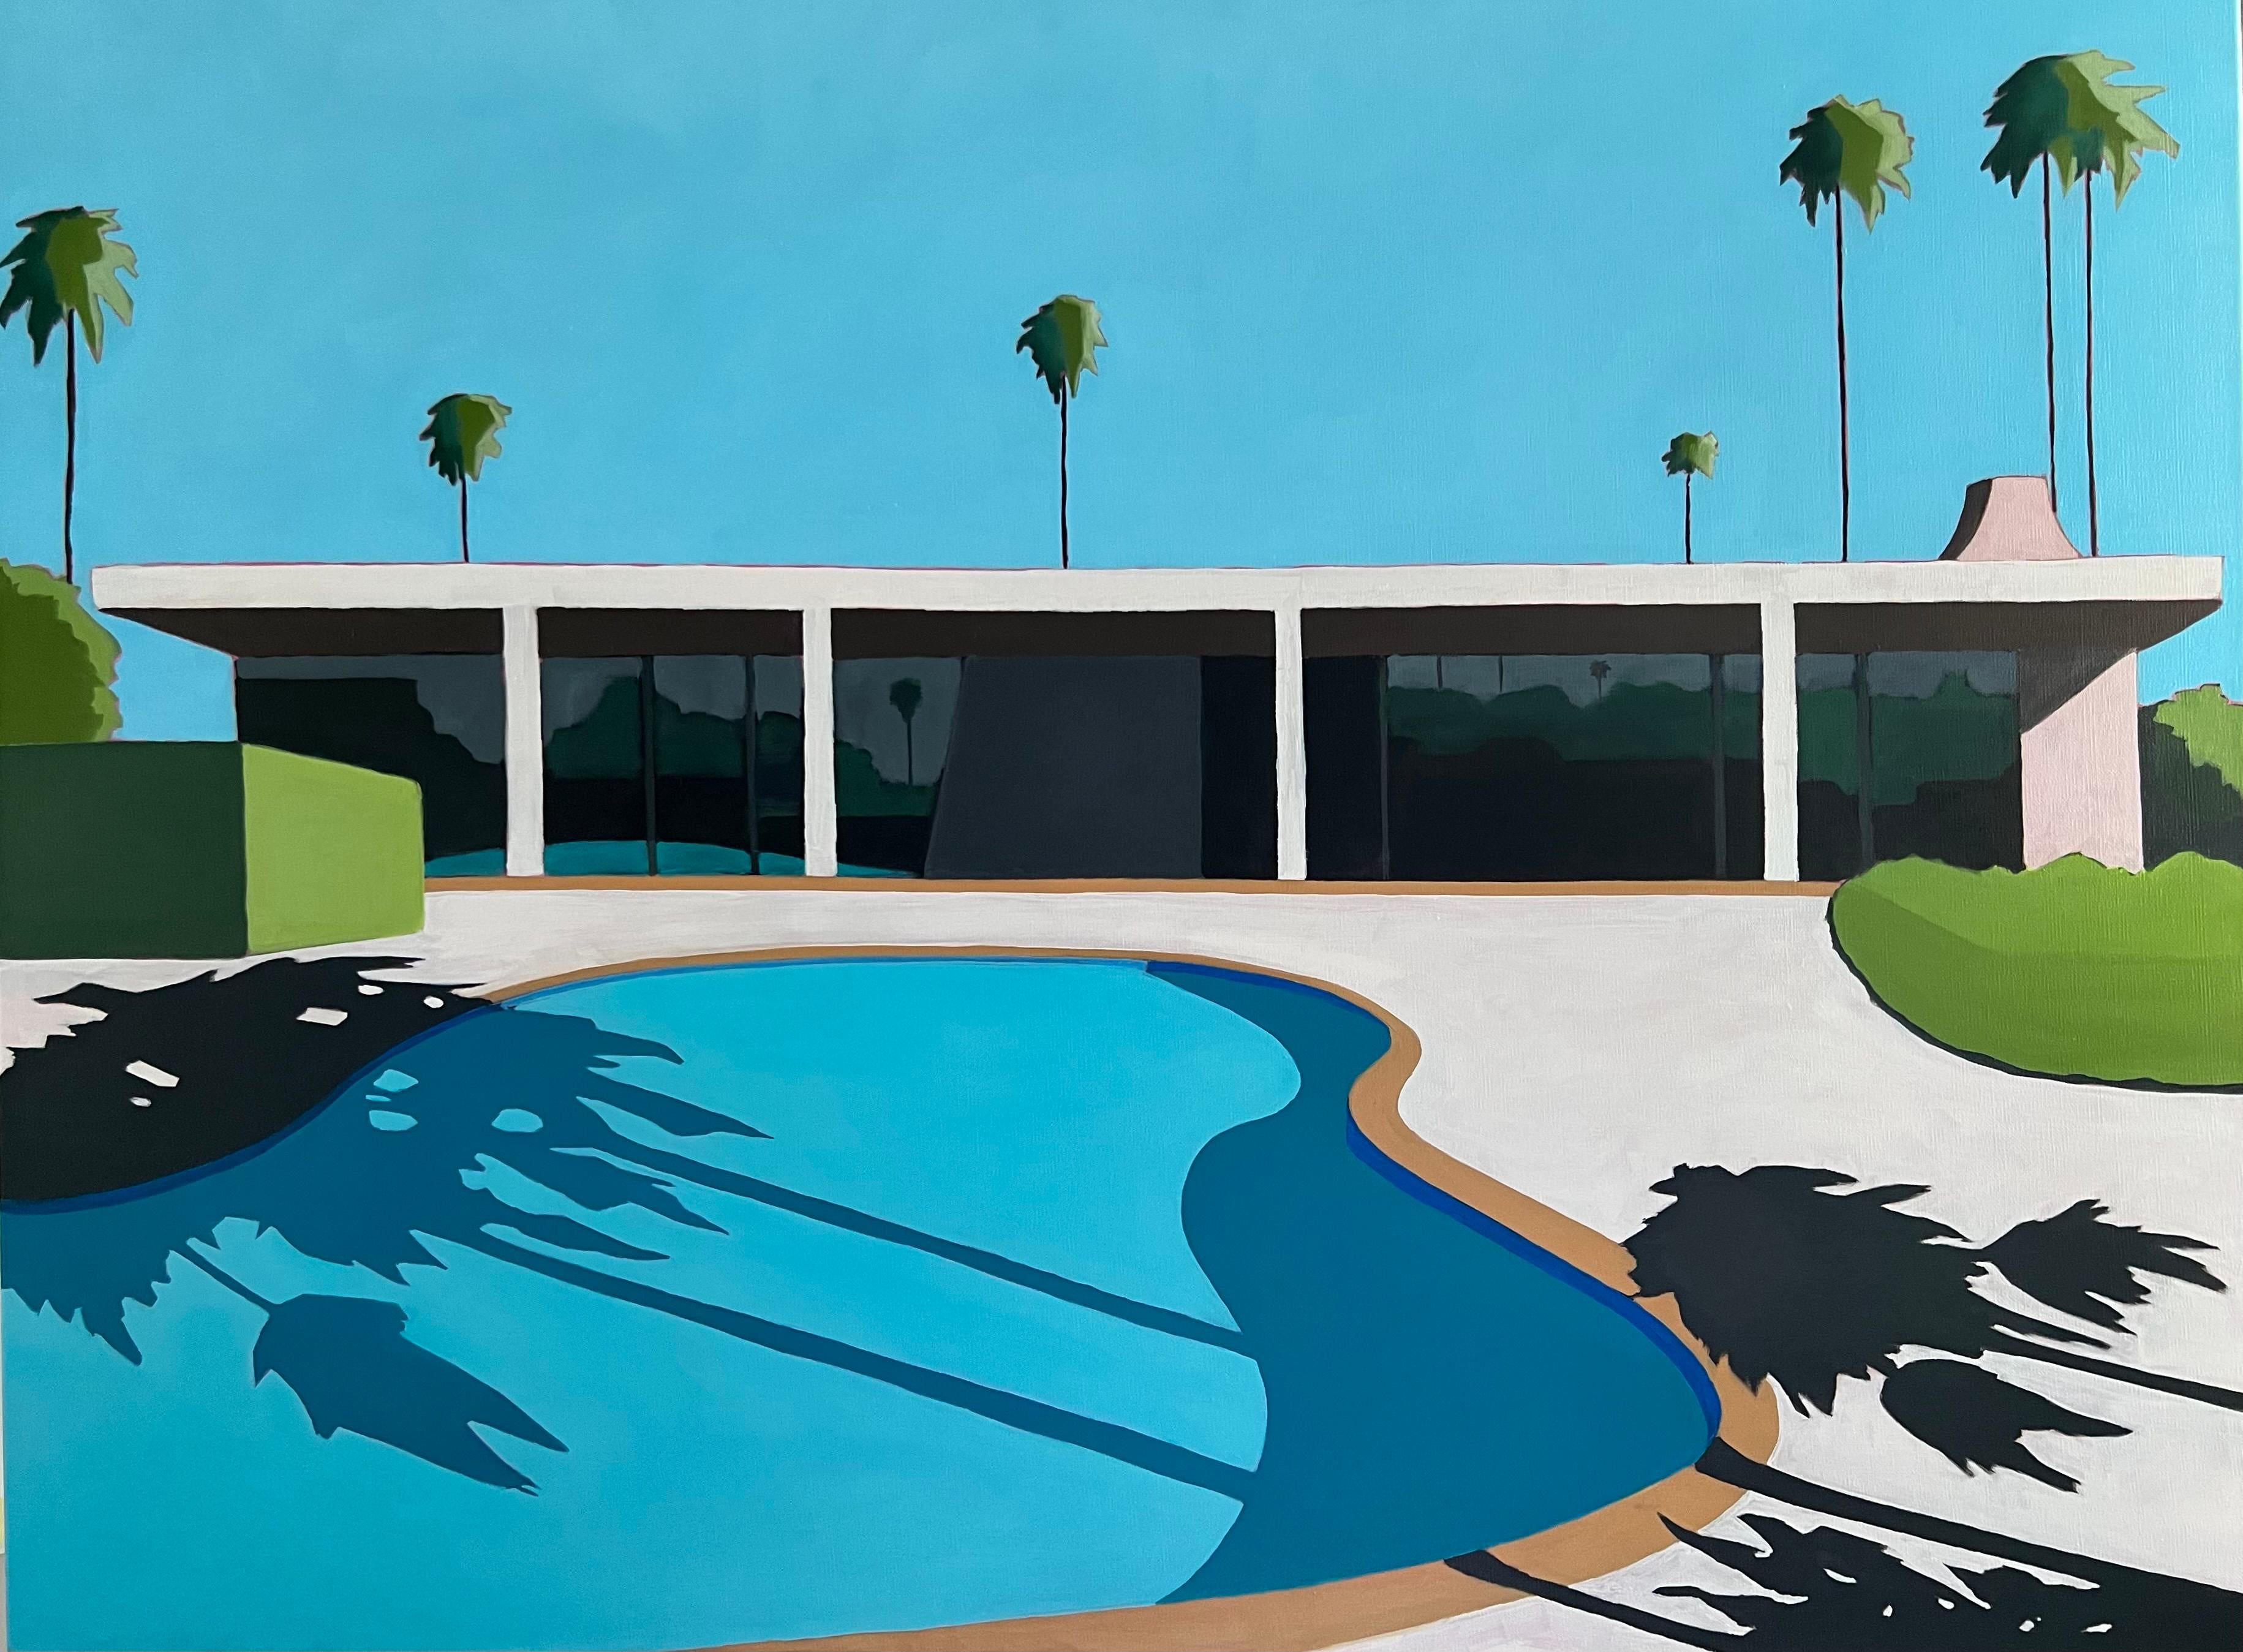 Californian Pool Encompassed by Palm Trees-original realism-minimalism painting